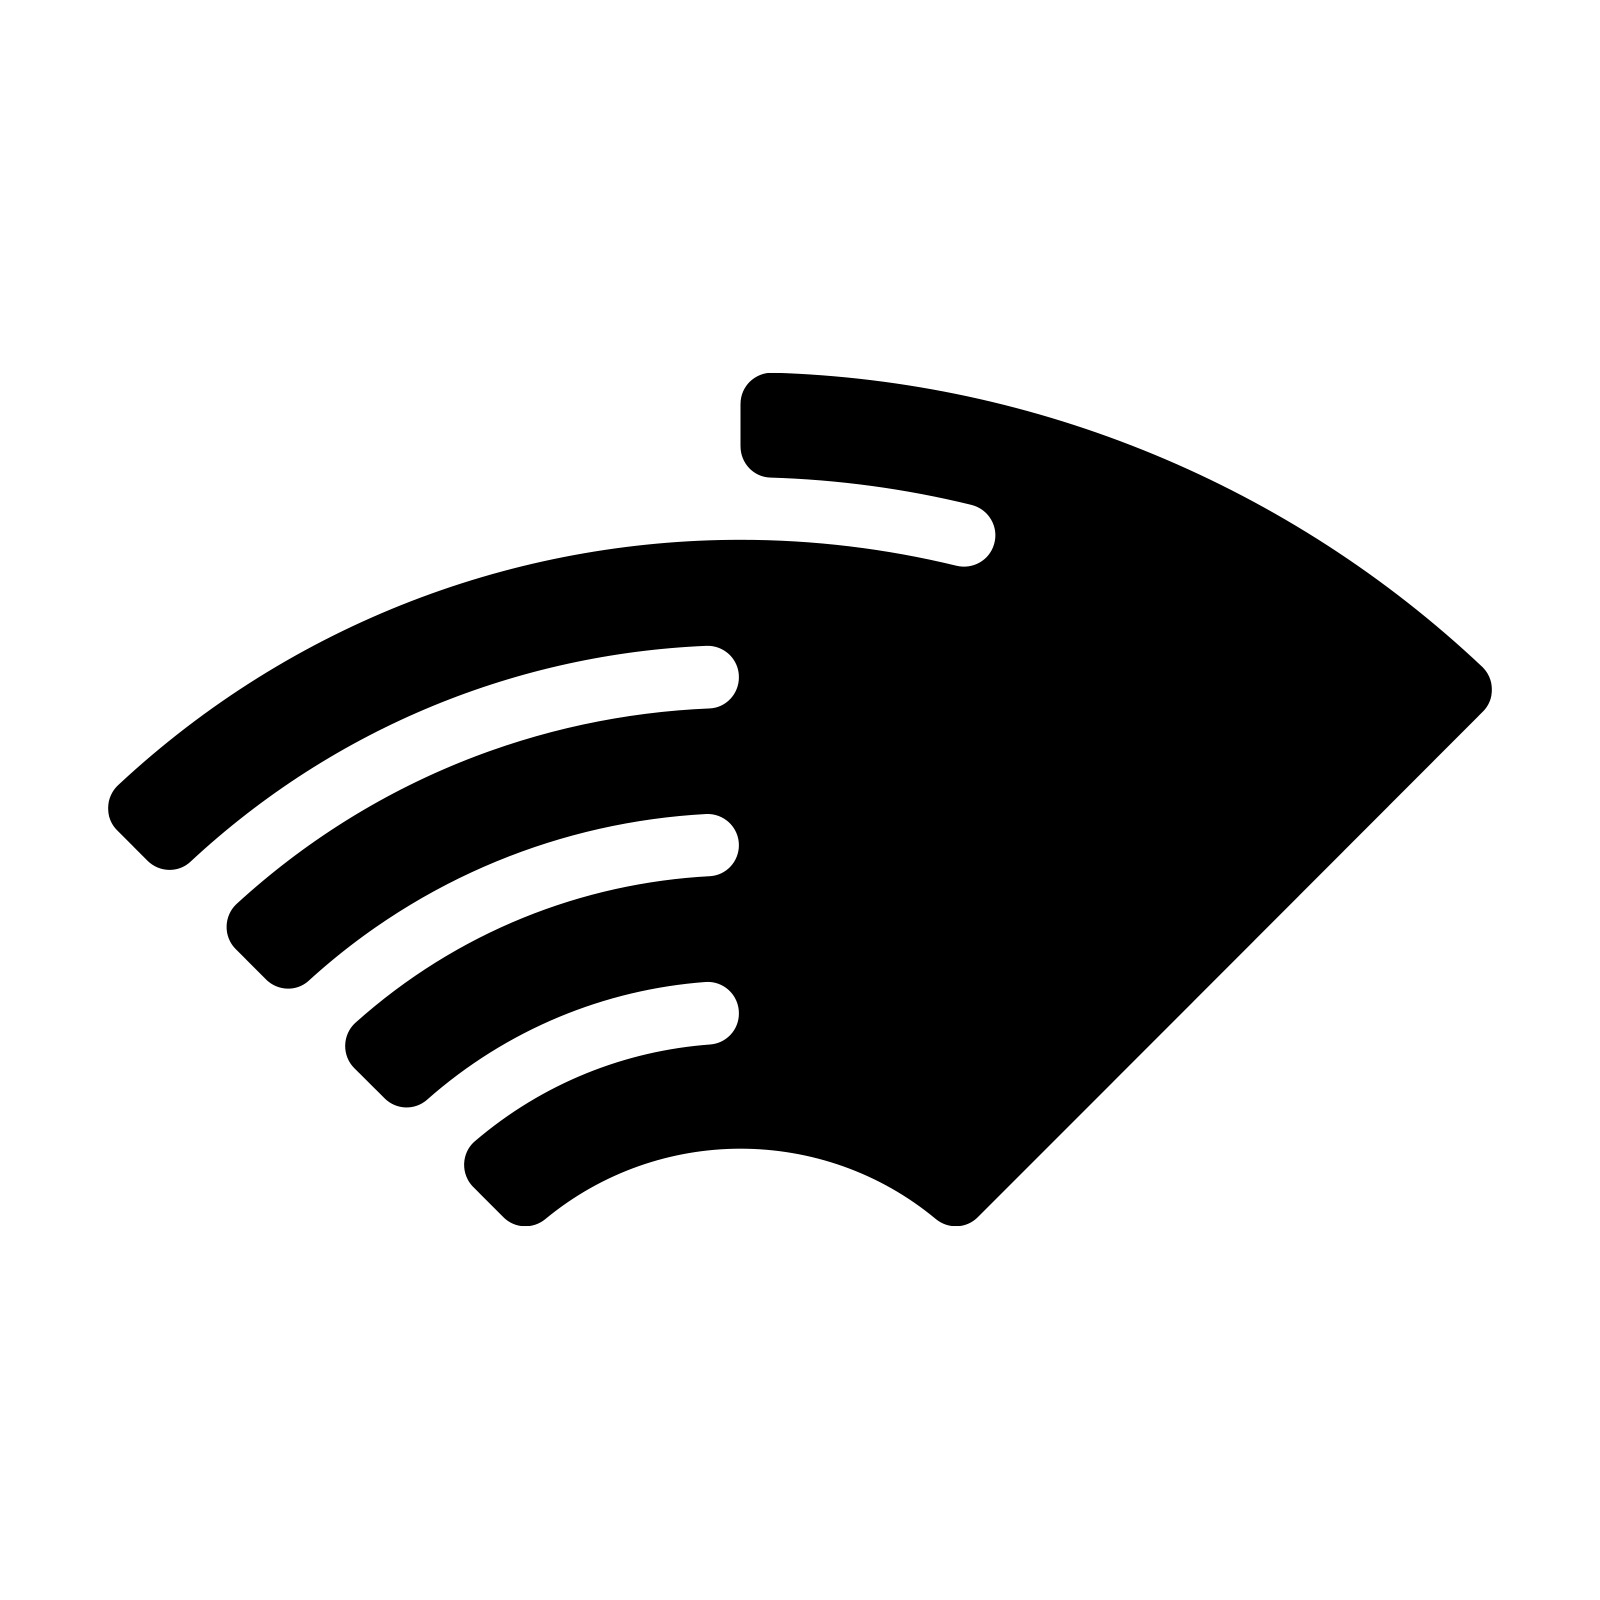 WirelessHandshake logo design by logo designer Stanislav+Regis for your inspiration and for the worlds largest logo competition